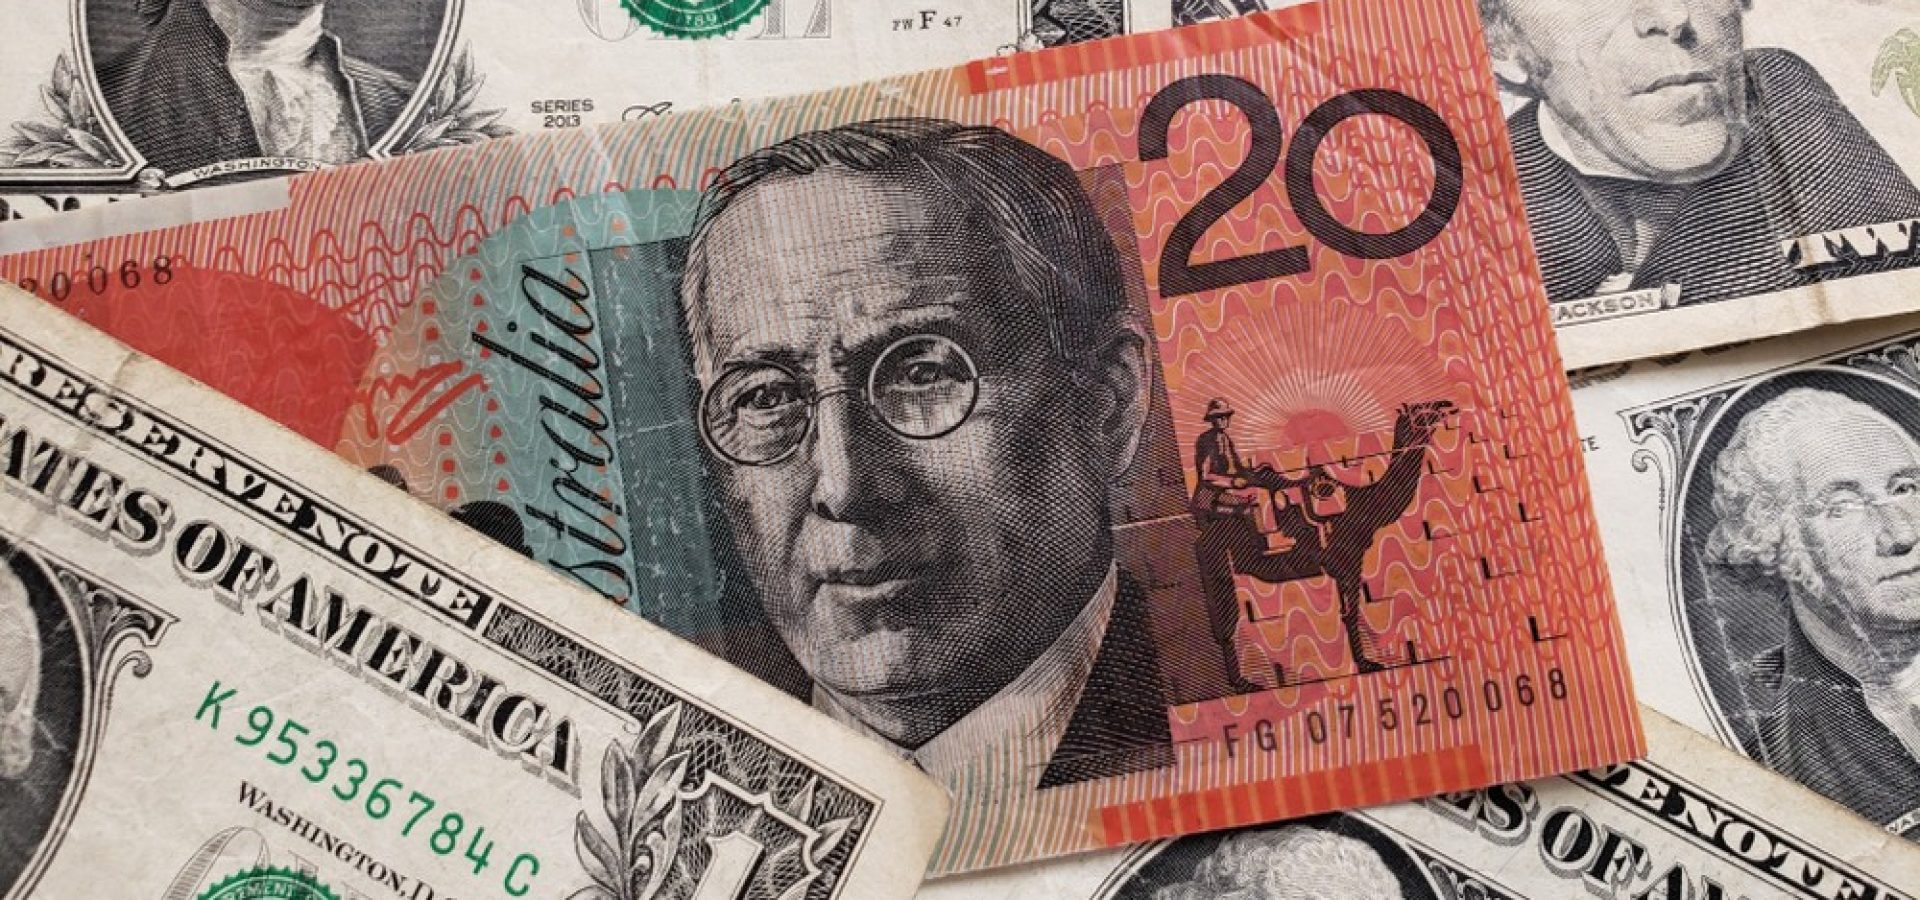 The Greenback: US dollar and Australian dollar banknotes.